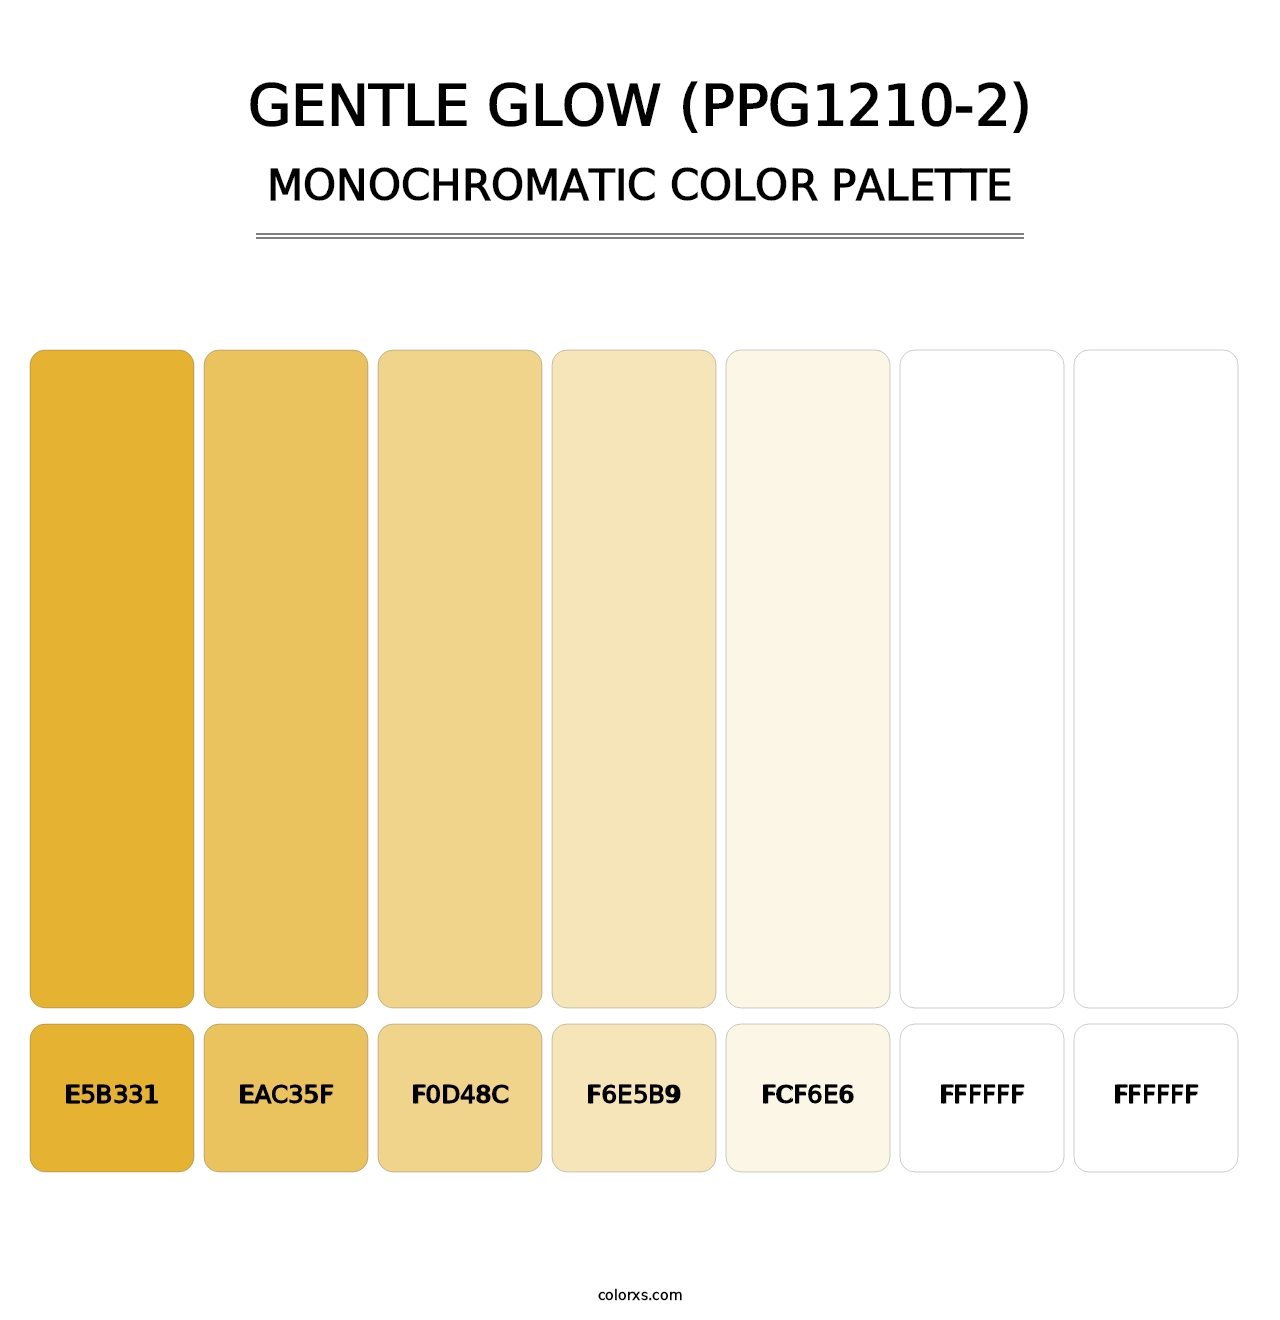 Gentle Glow (PPG1210-2) - Monochromatic Color Palette